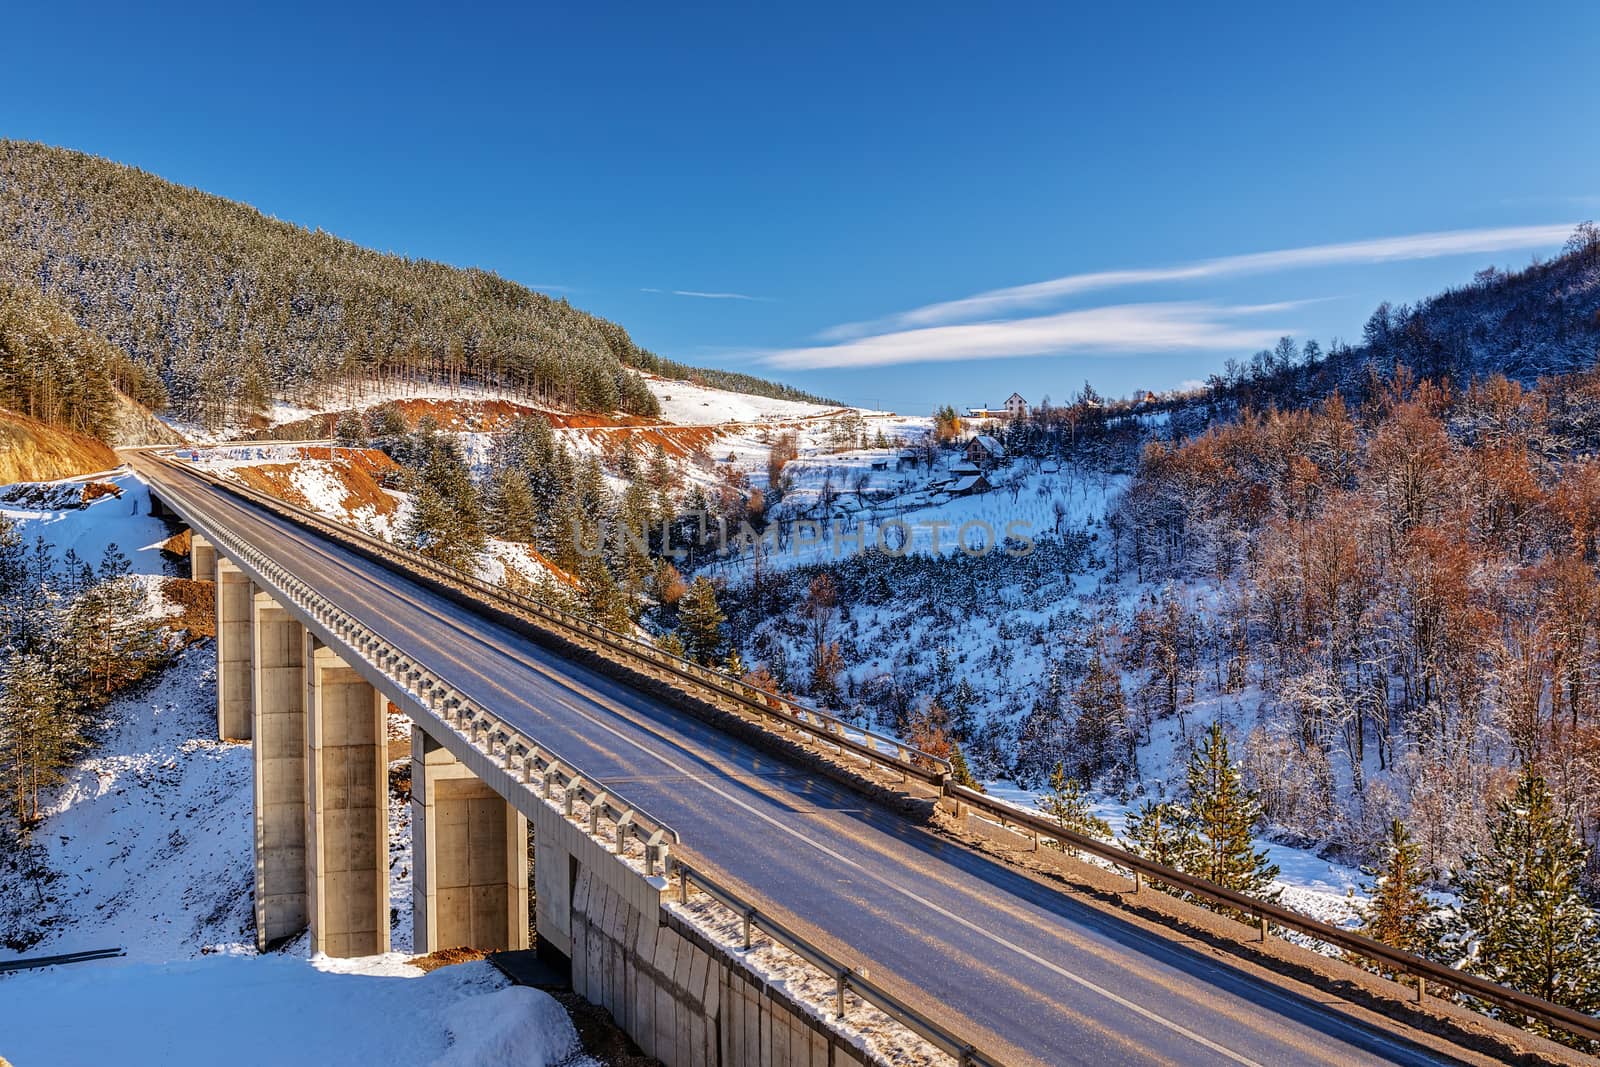 mountain bridge in winter with snow and blue sky, zlatibor mountain, serbia